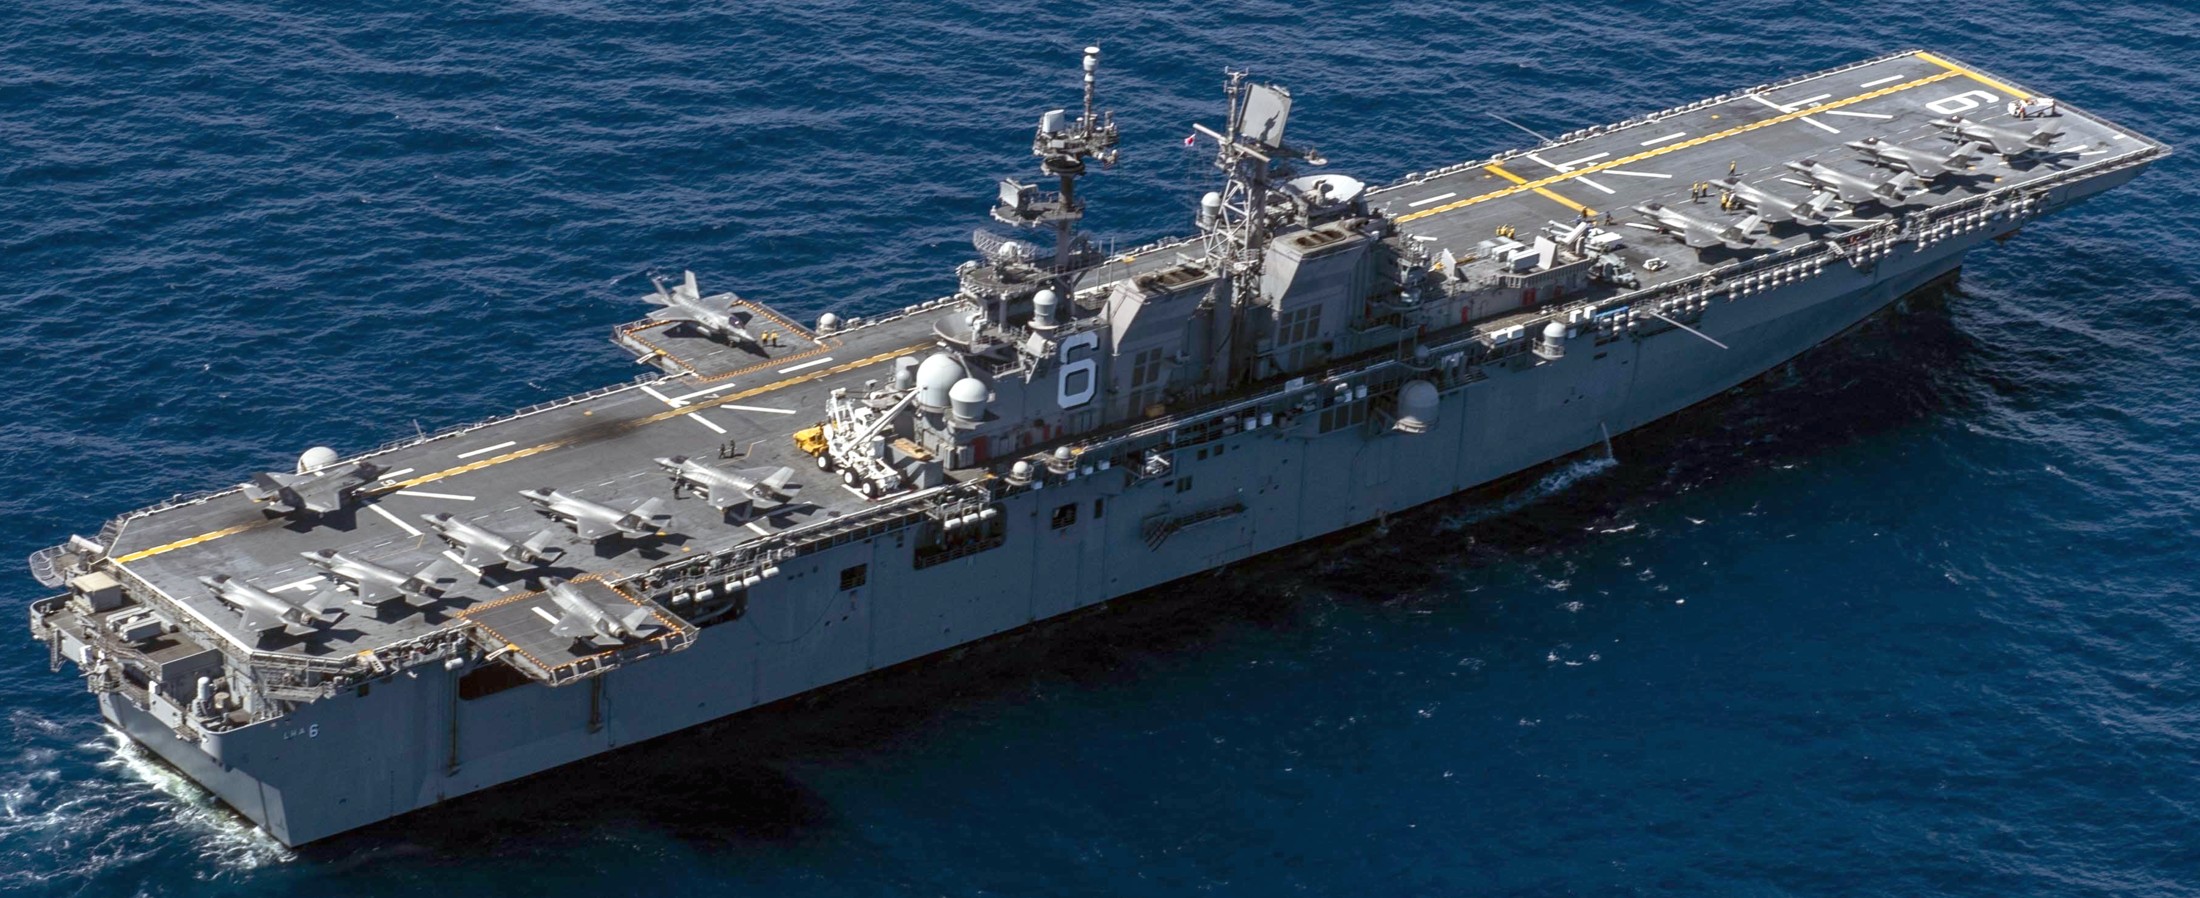 lha-6 uss america amphibious assault ship landing us navy 05 f-35b lightning ii